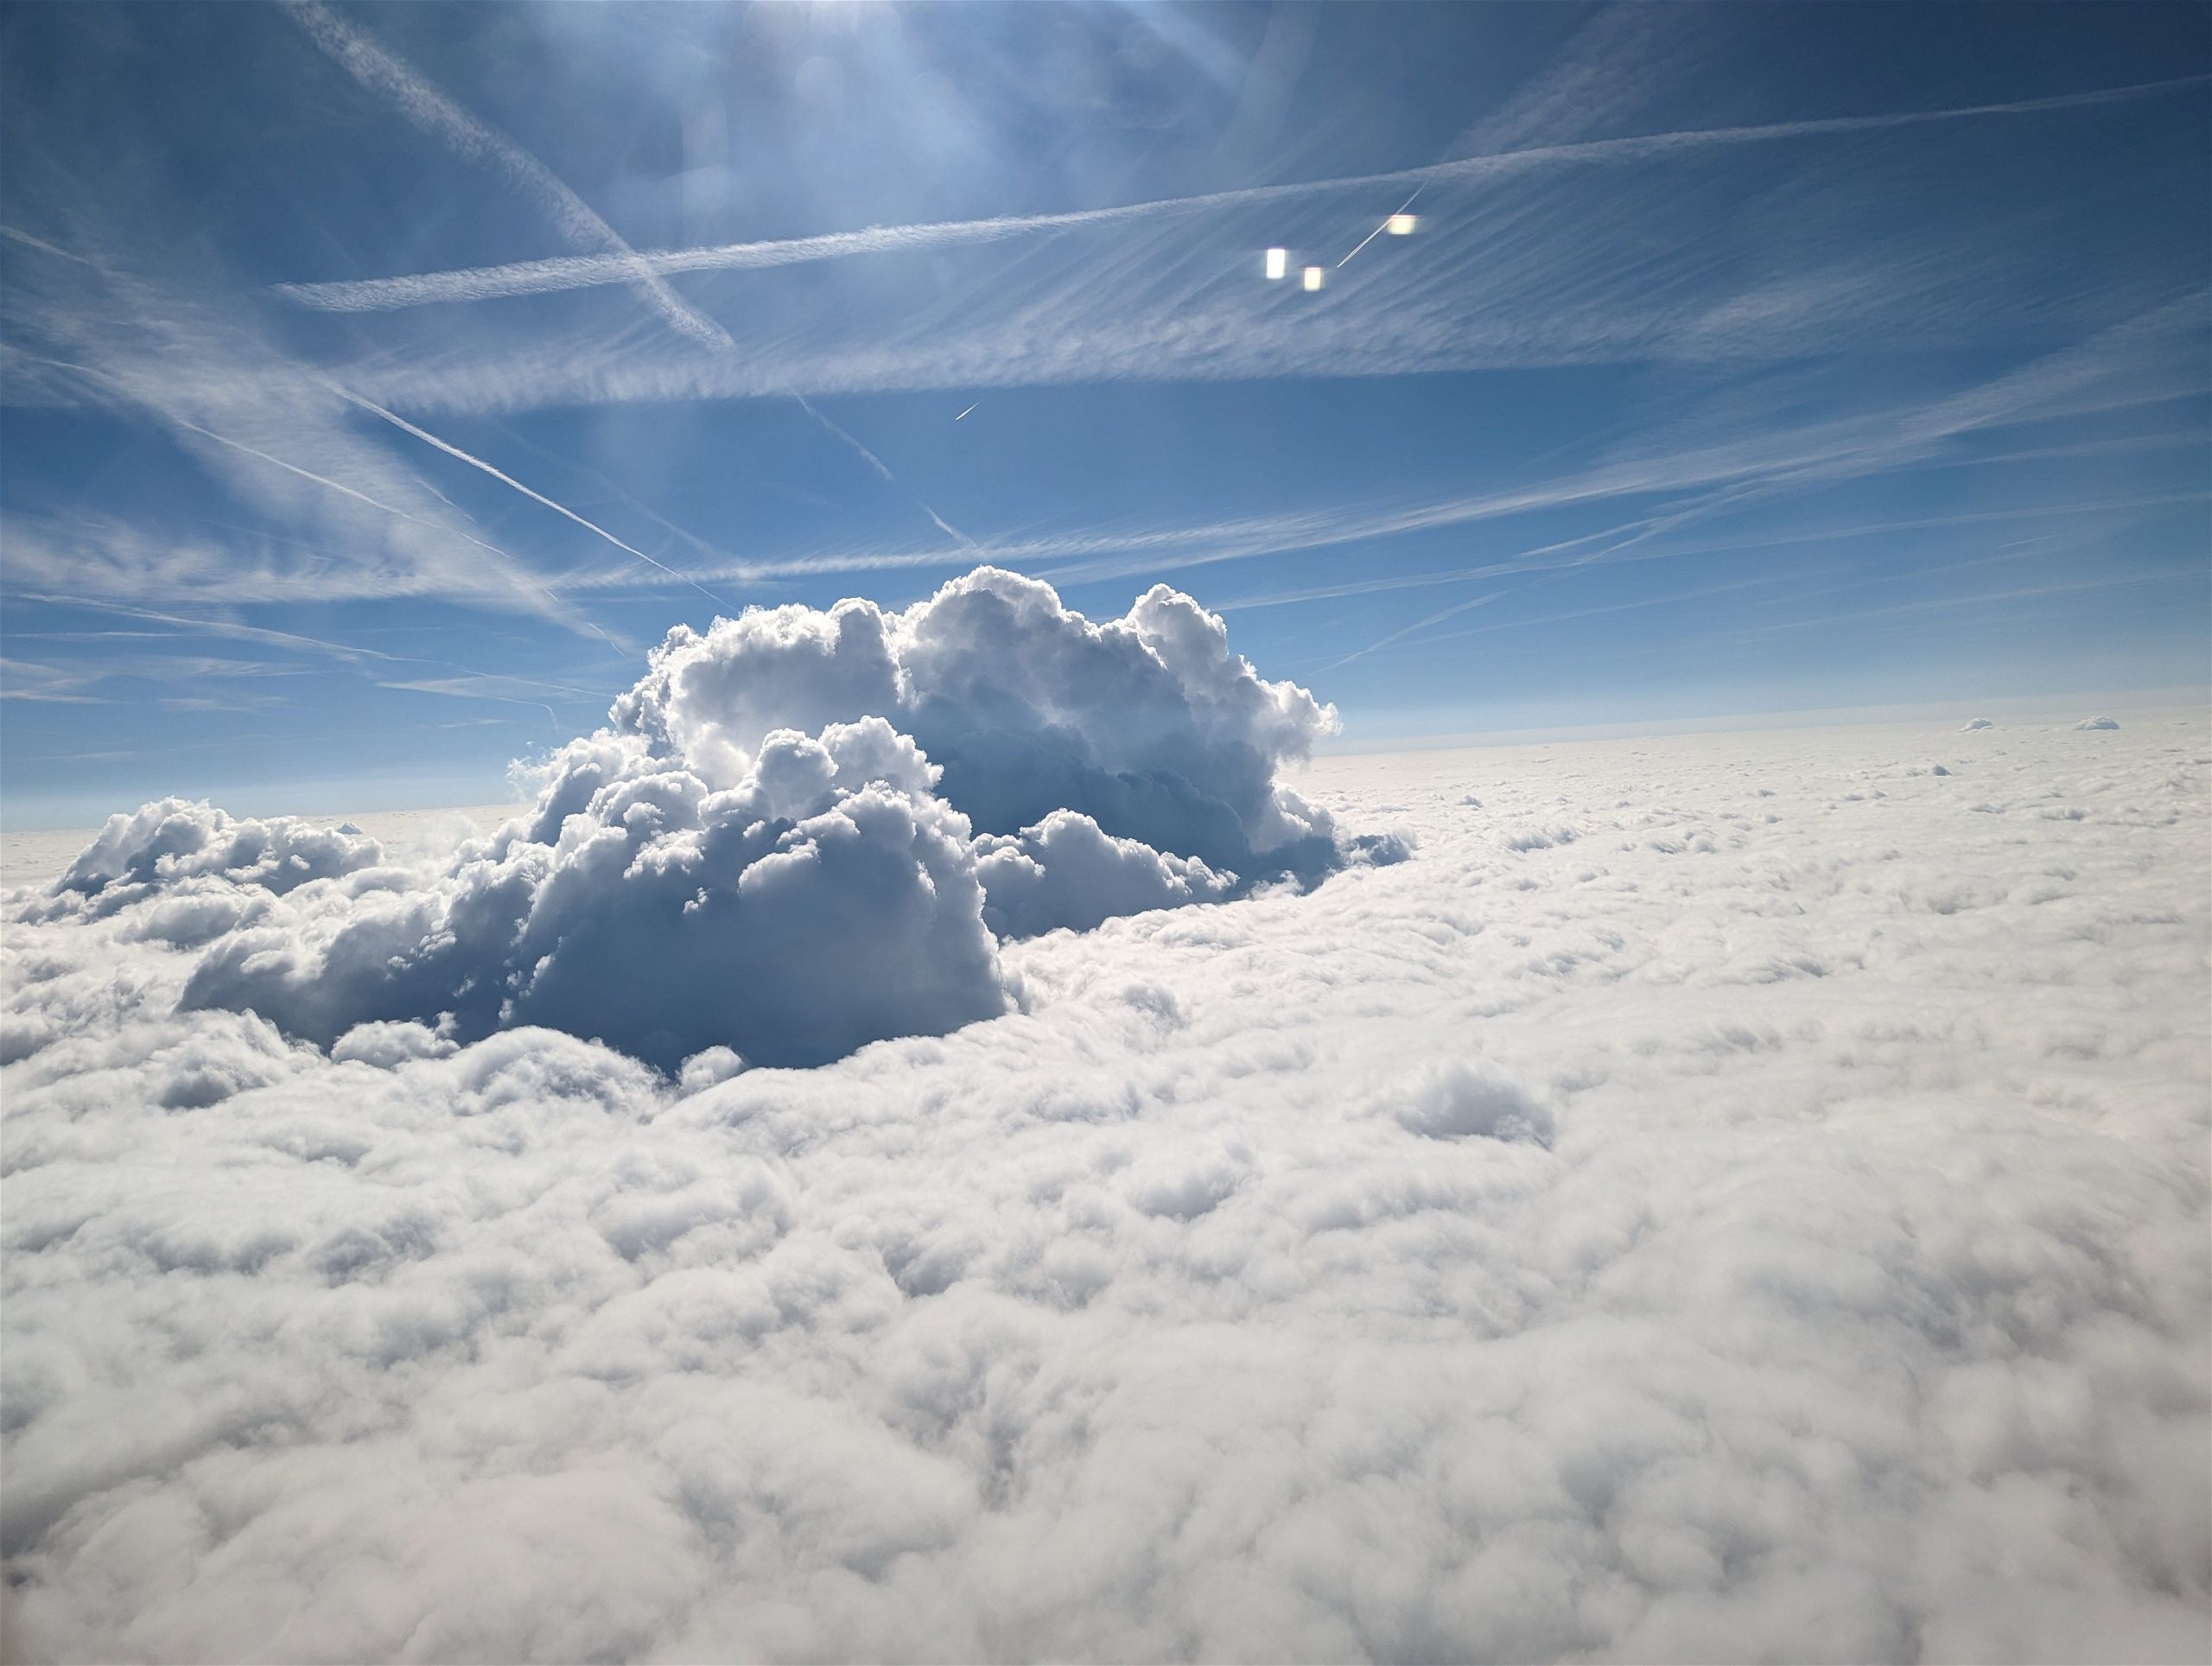 Fluffy cloud seen from below